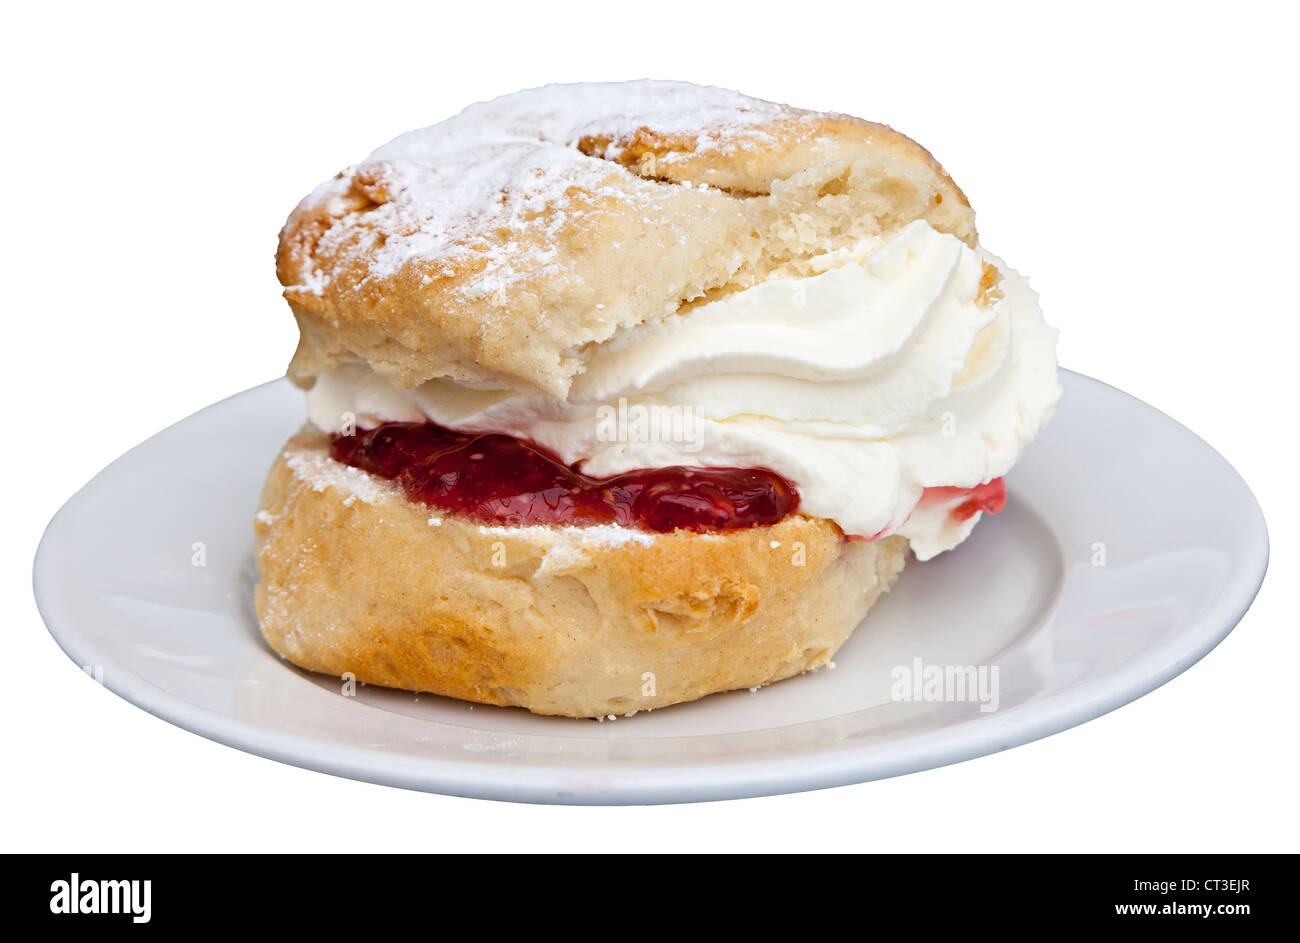 Home made scone with jam and fresh cream, UK Stock Photo